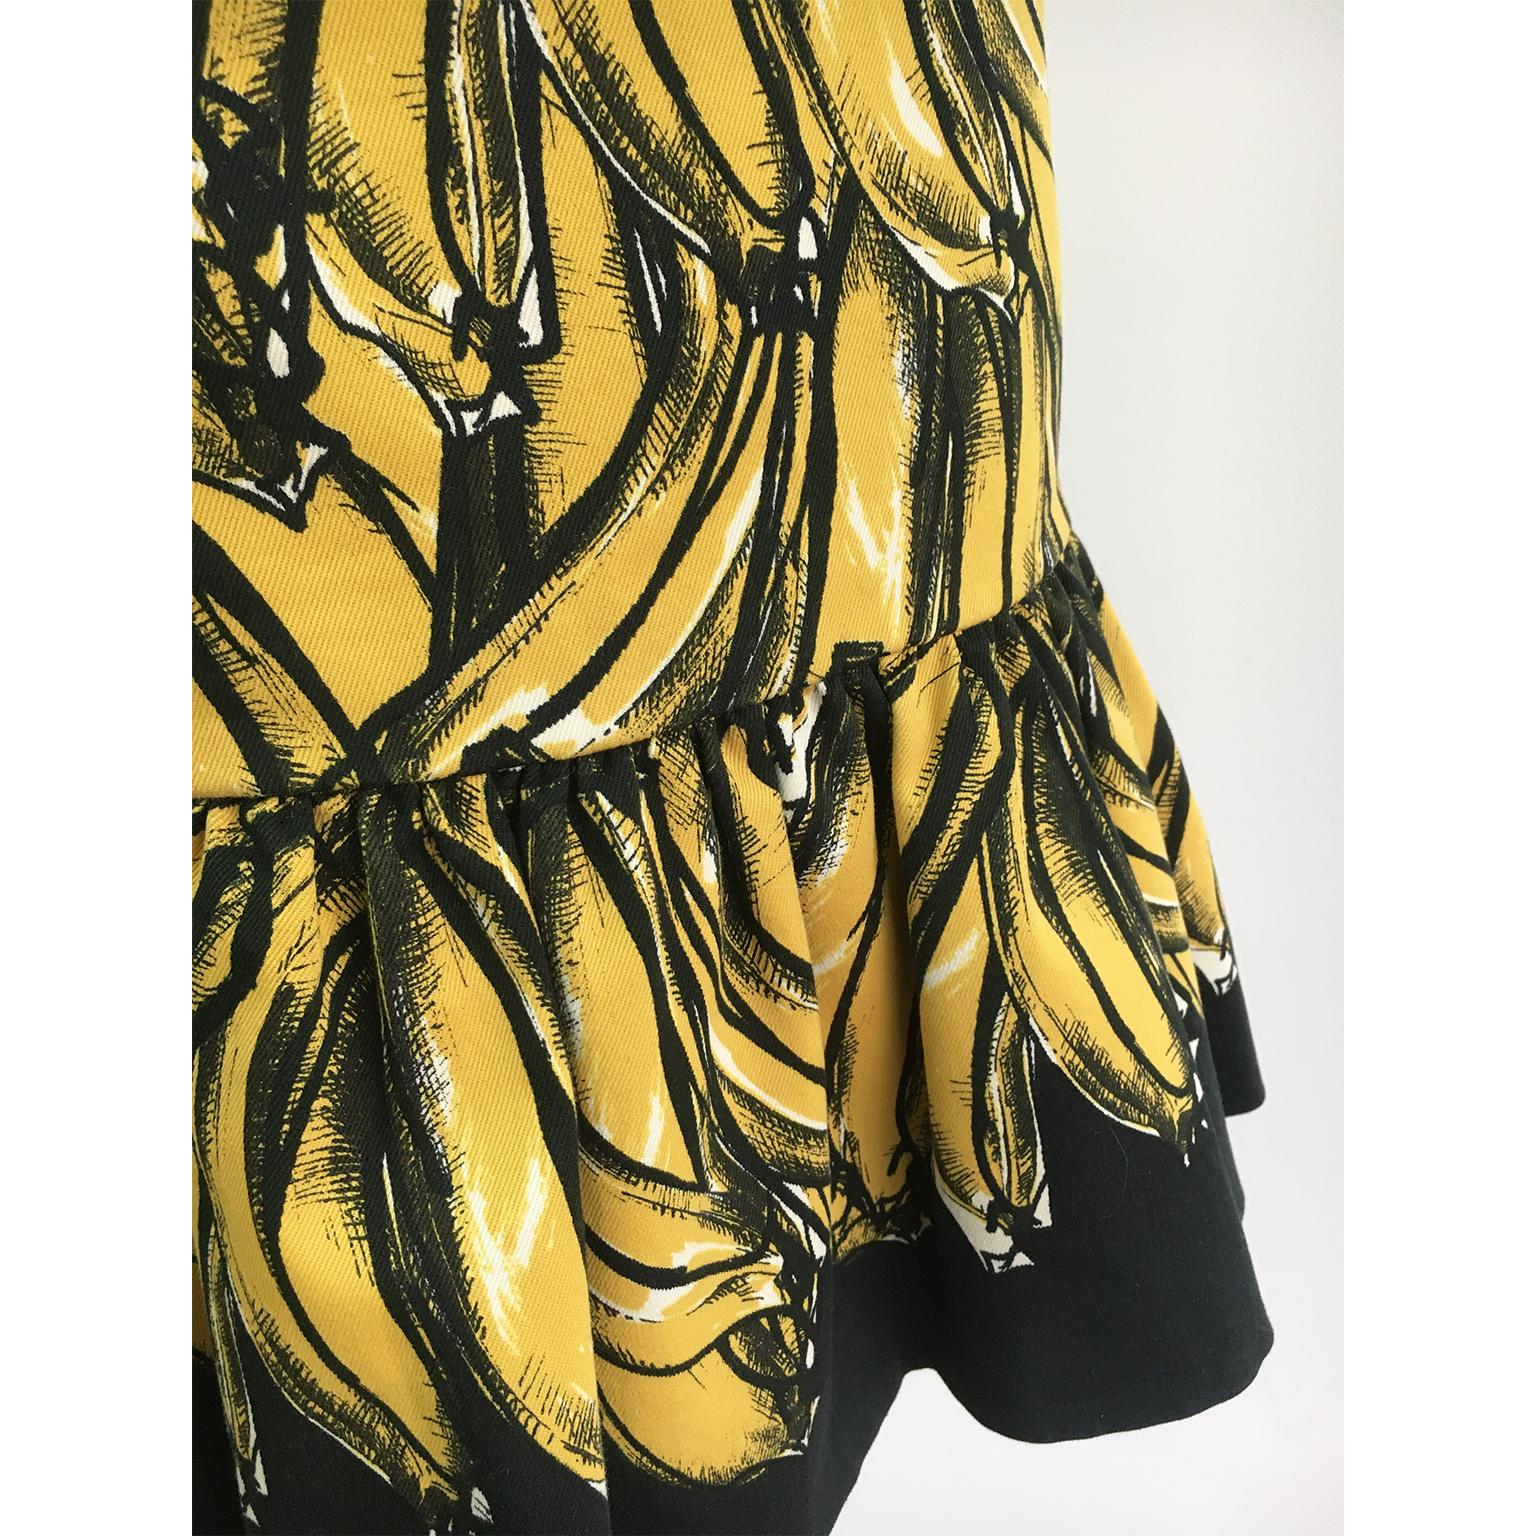 Women's Prada Bananas Mini Skirt SS 2011